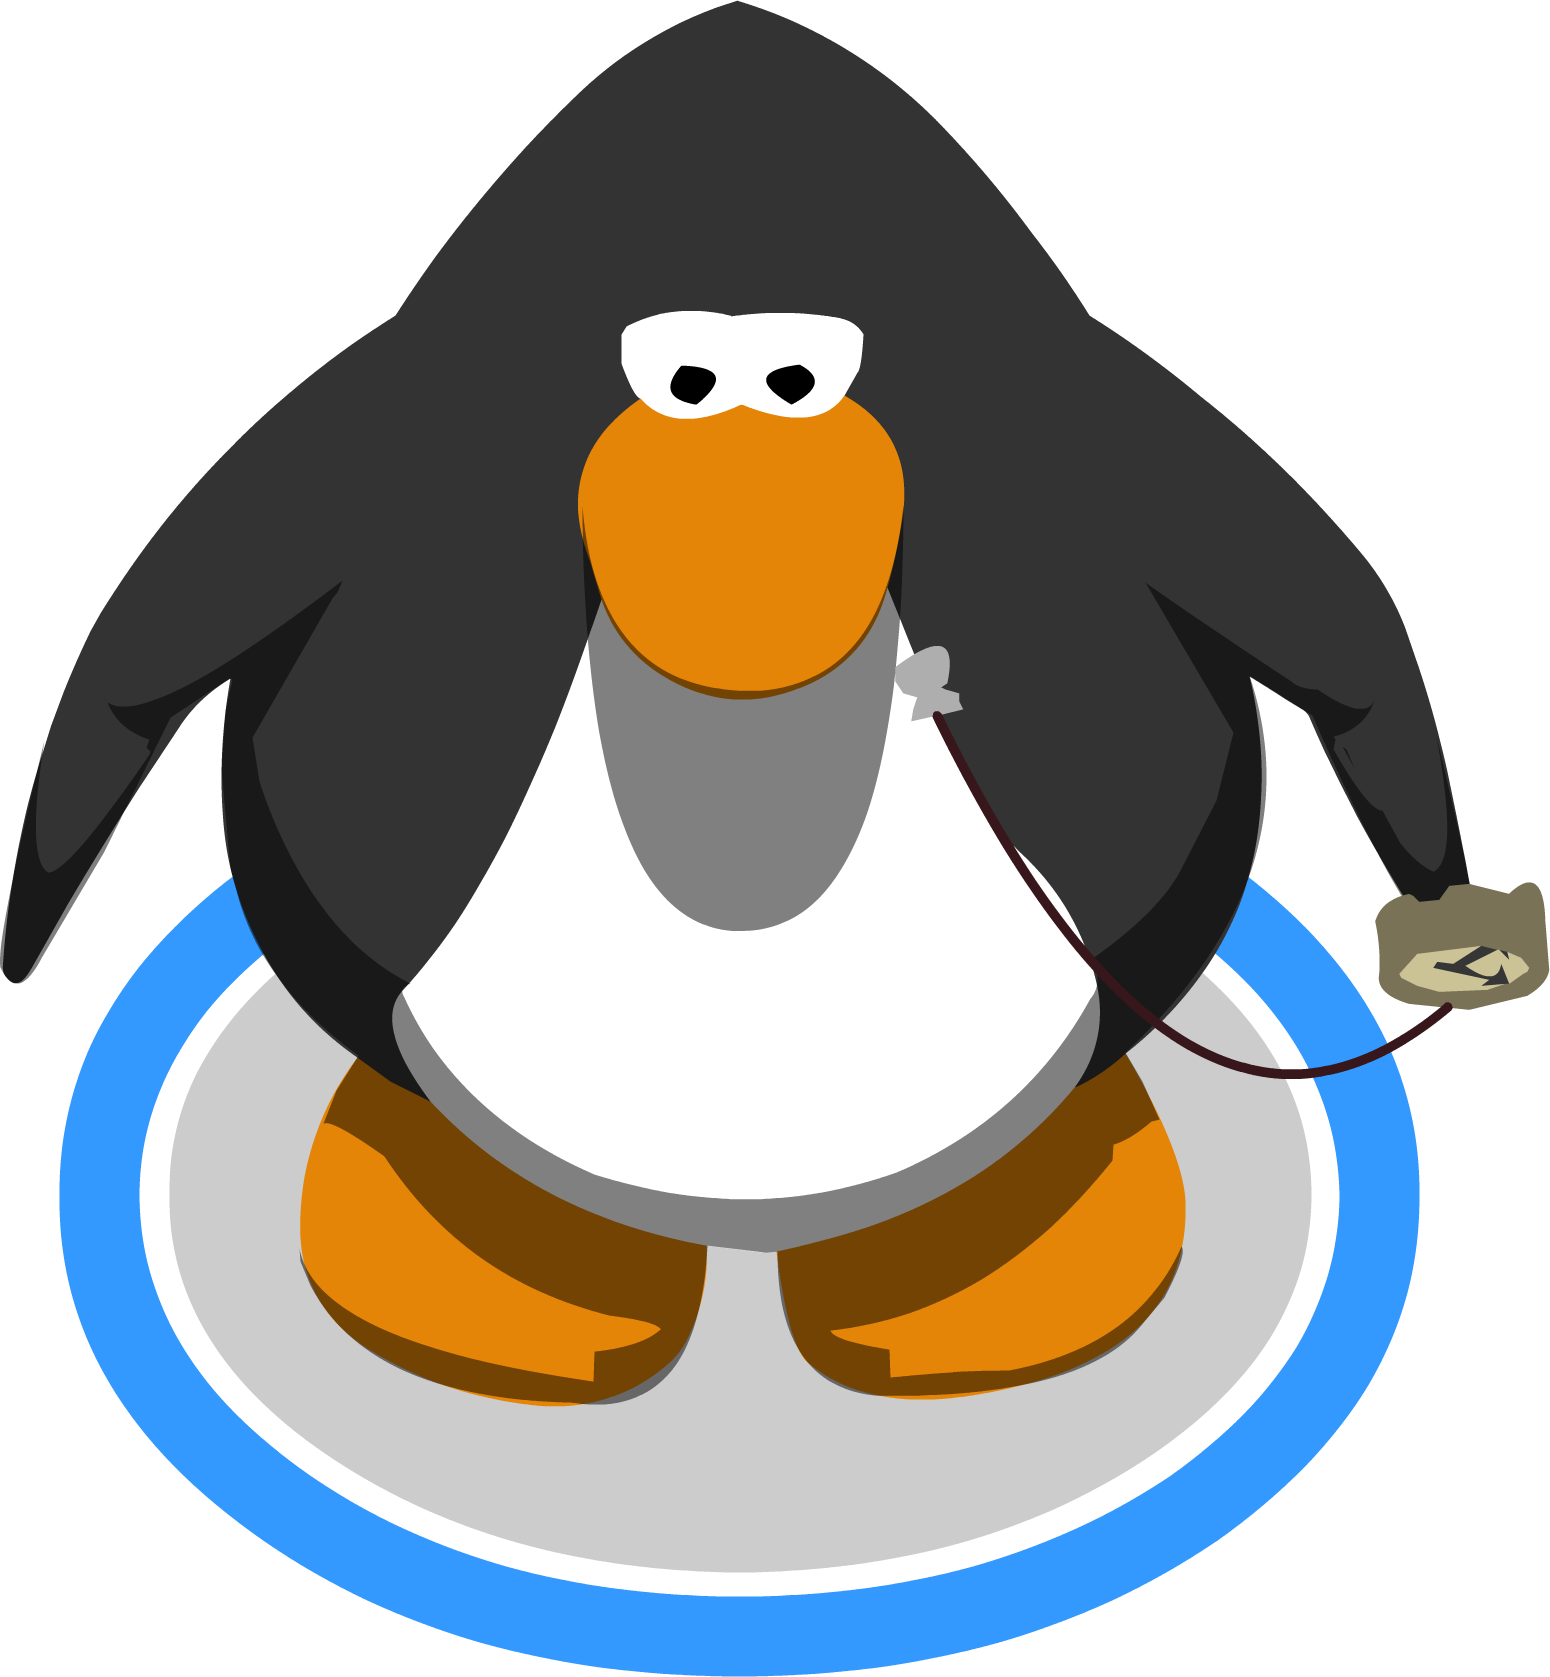 Normal Penguin112233 - Club Penguin Penguin In Game (1550x1677)